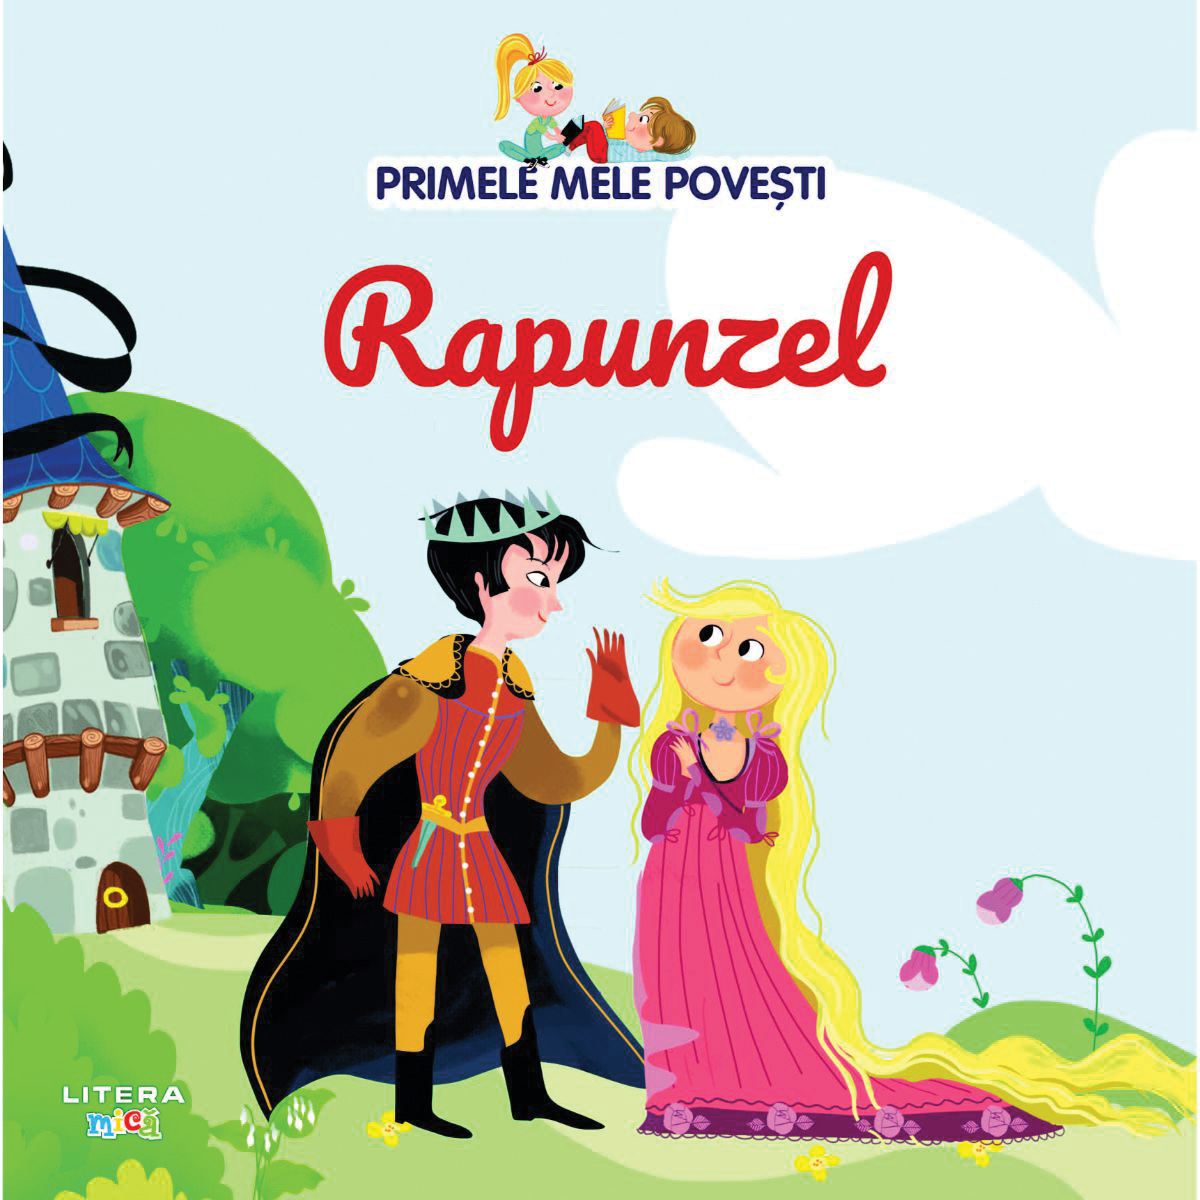 Primele mele povesti, Rapunzel